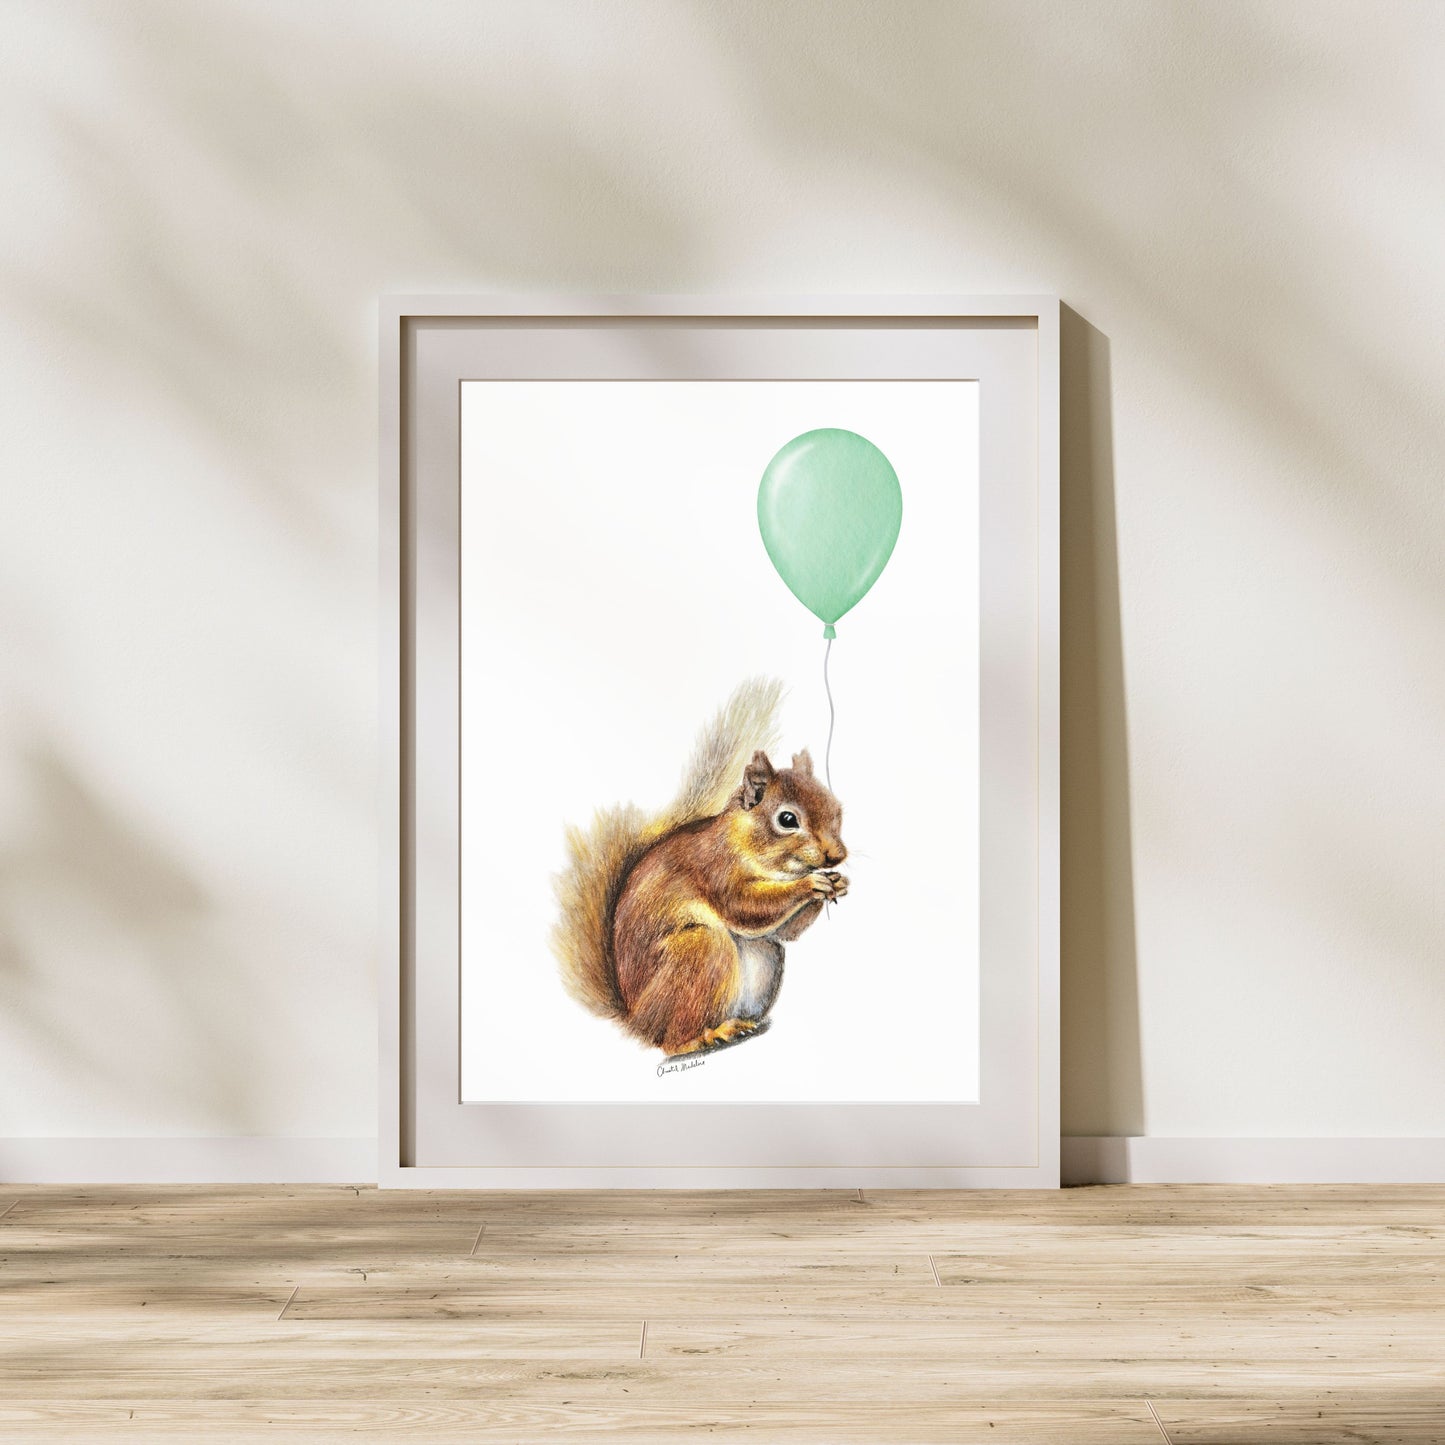 Squirrel With Green Balloon, Woodland nursery art, Giclee print on fine art paper